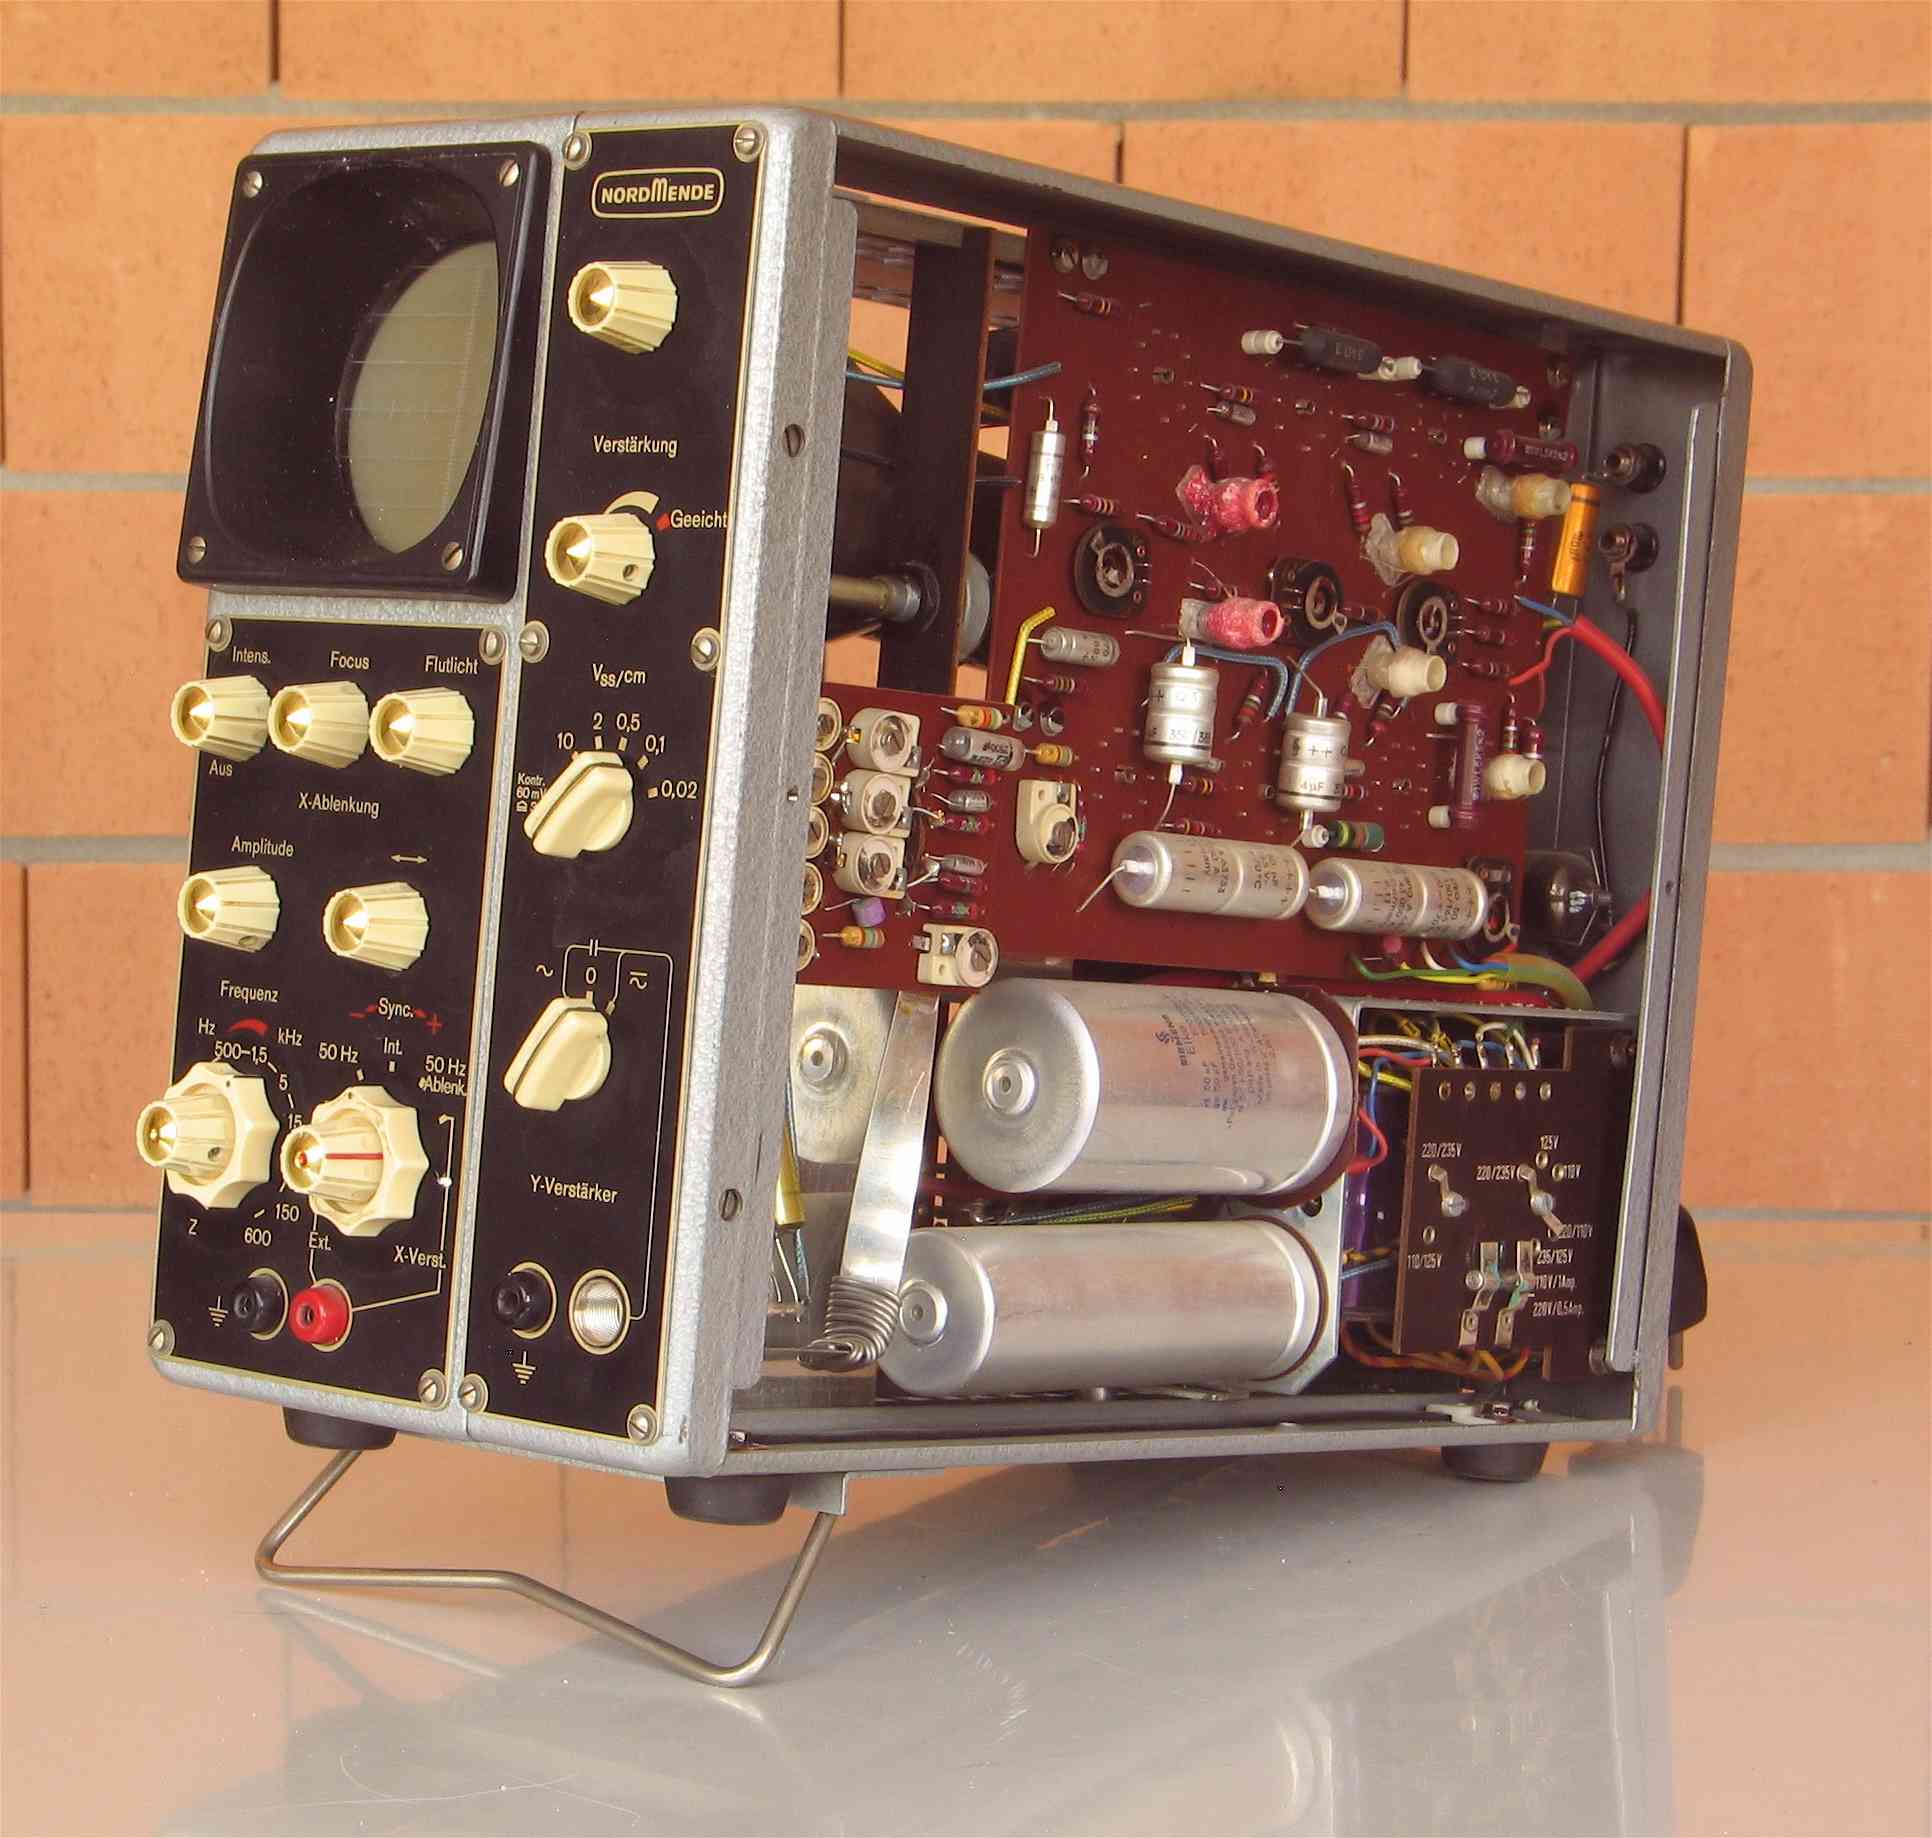 Oscilloscope à tube cathodique
(NordMende UO 963)